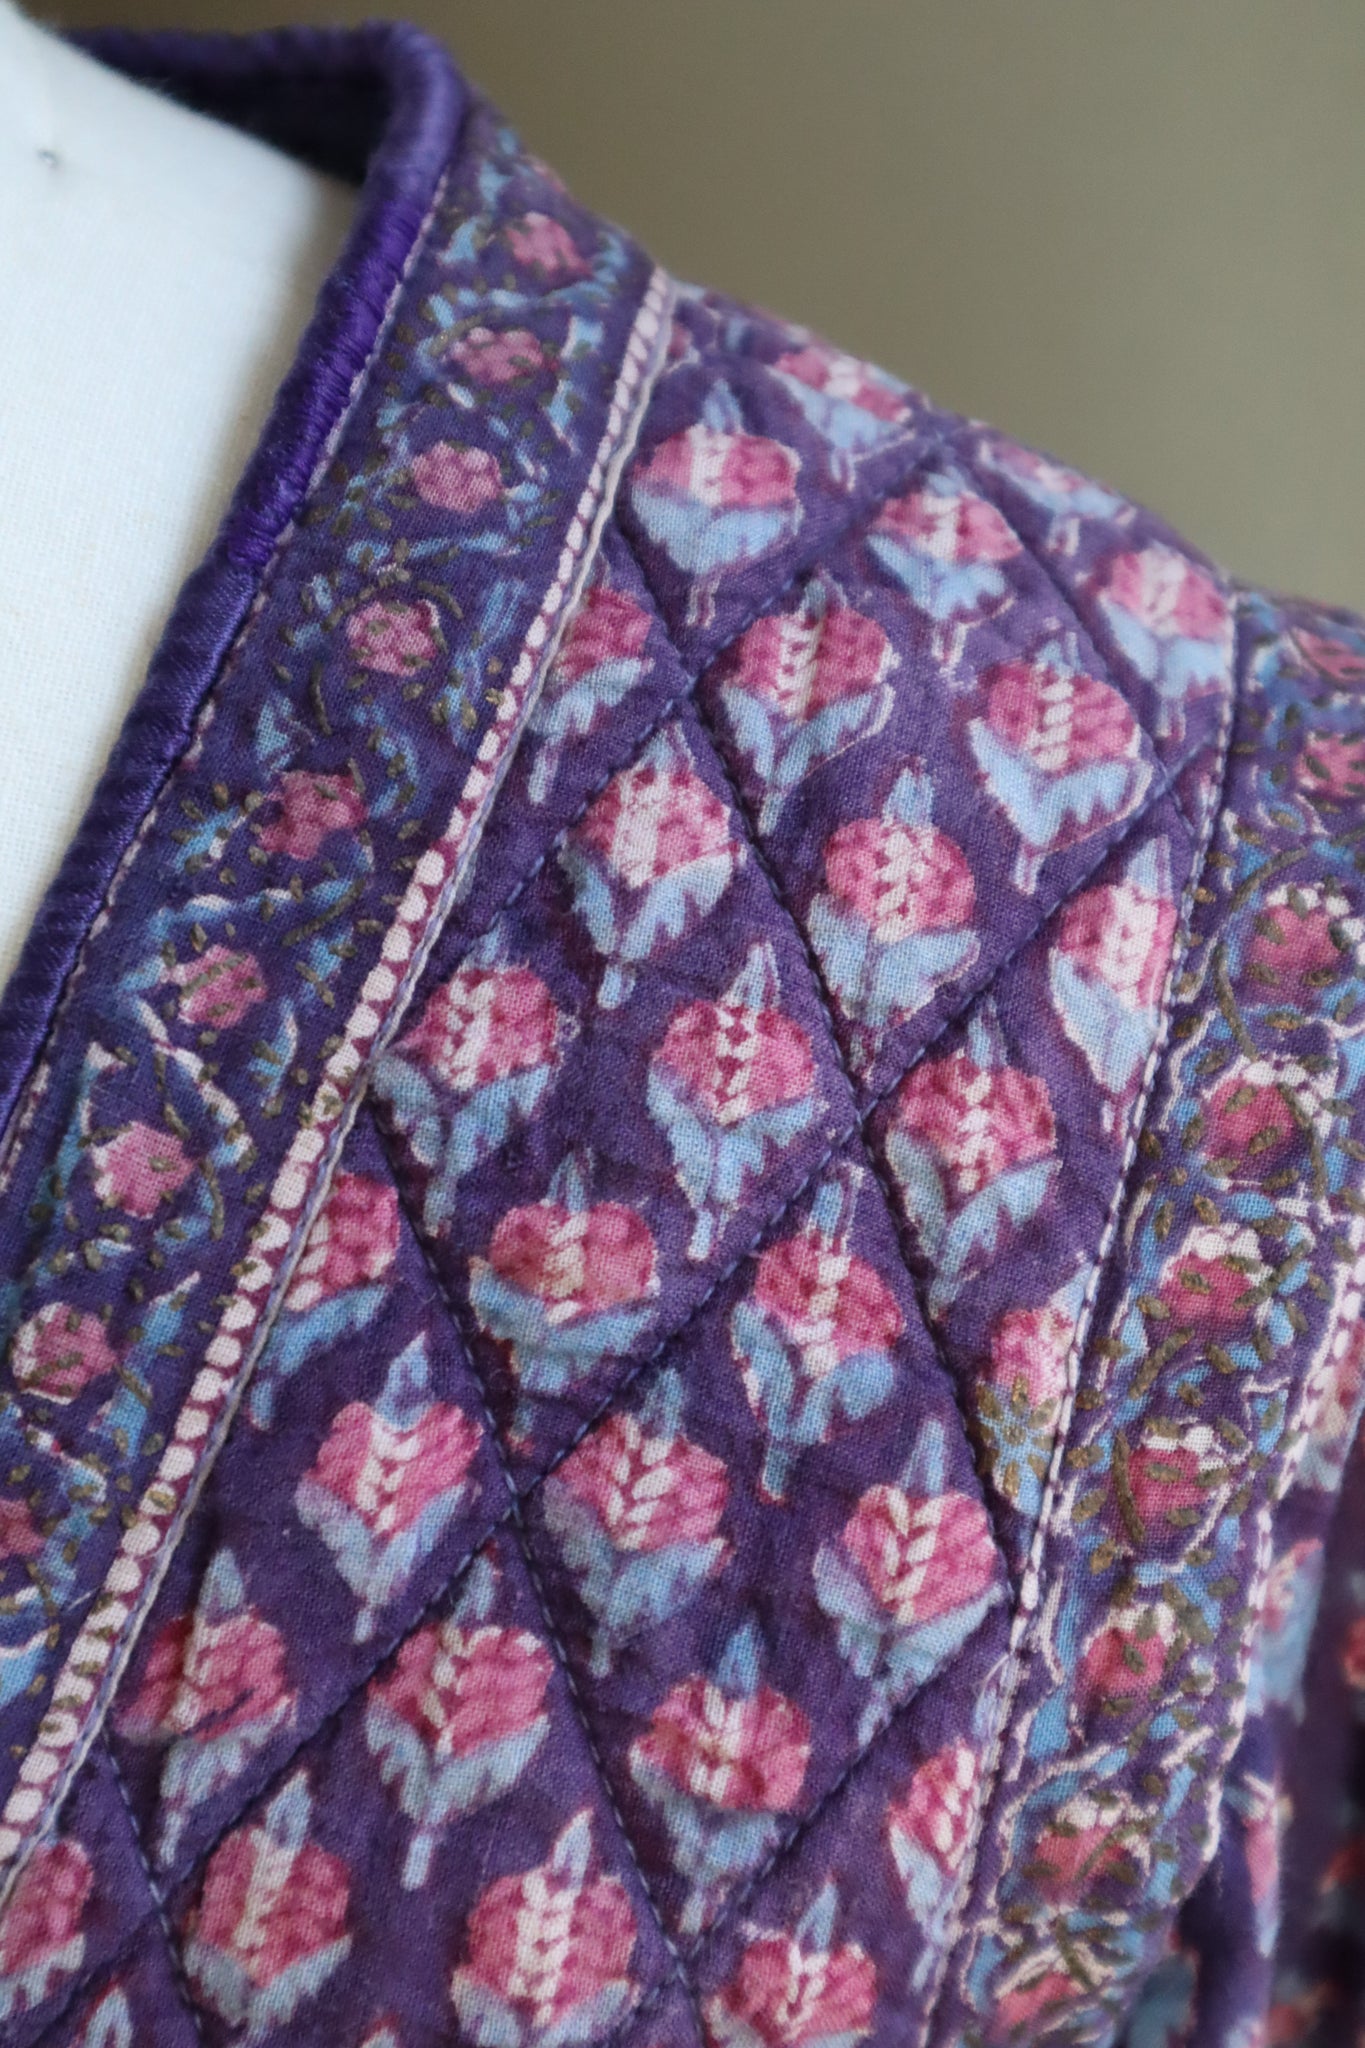 70s PHOOL Indian Cotton Purple Dress